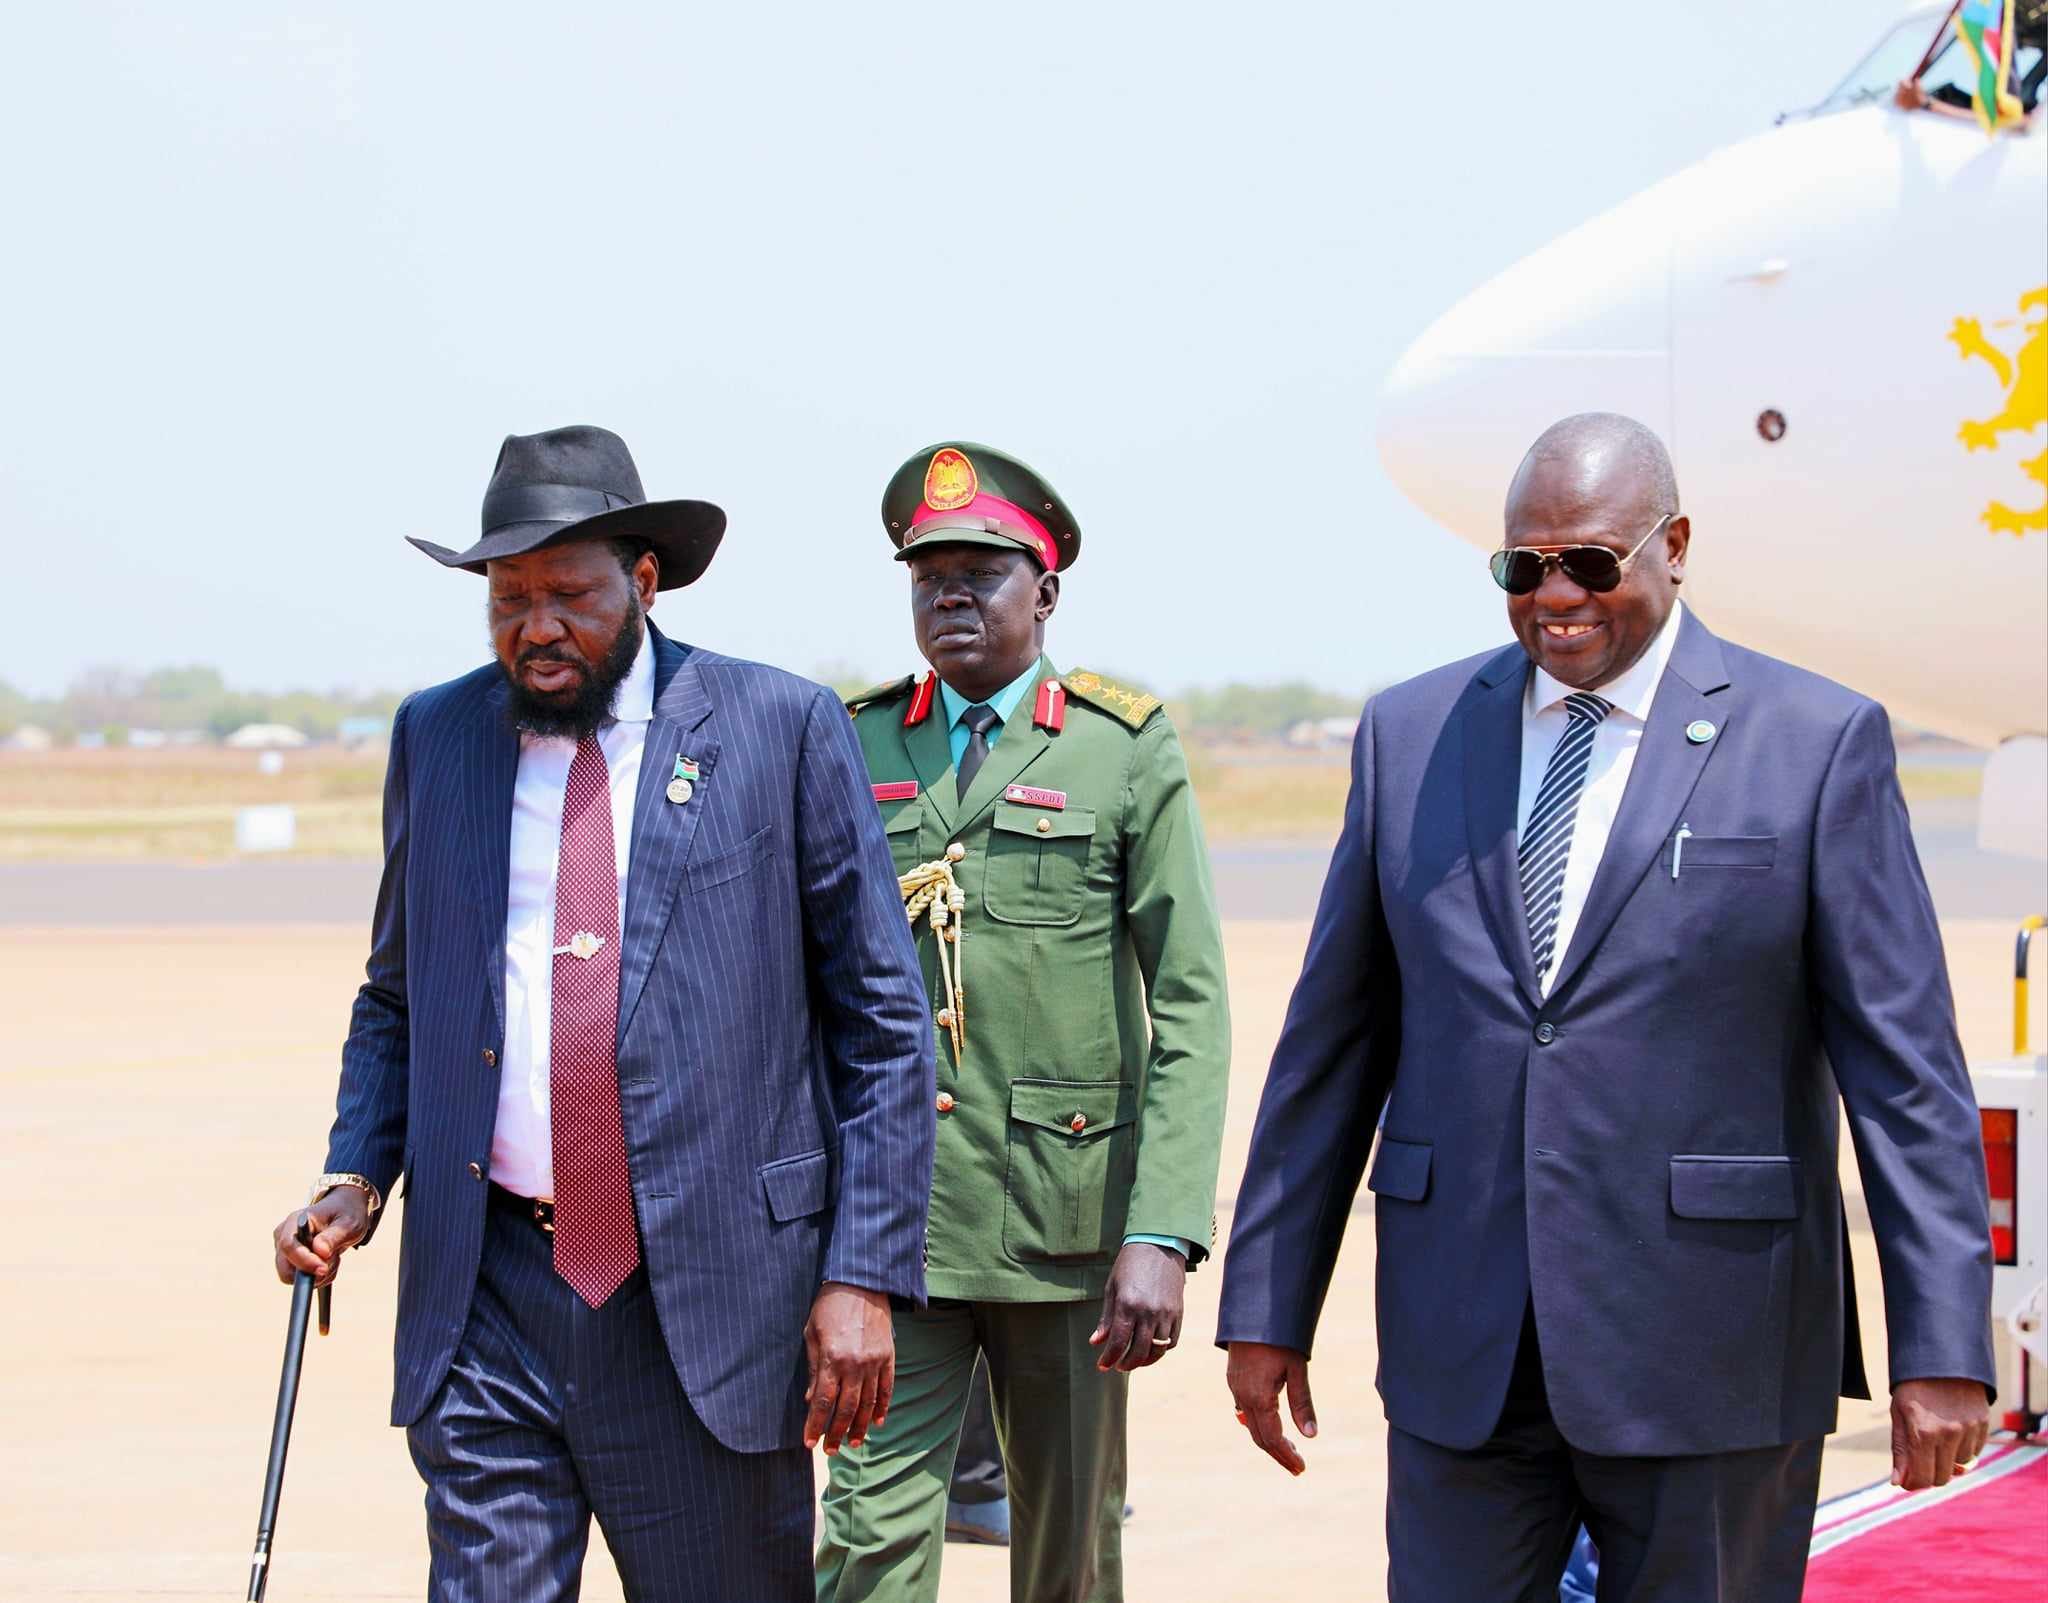 Kiir, Machar failed to meet standards for elections, says Washington